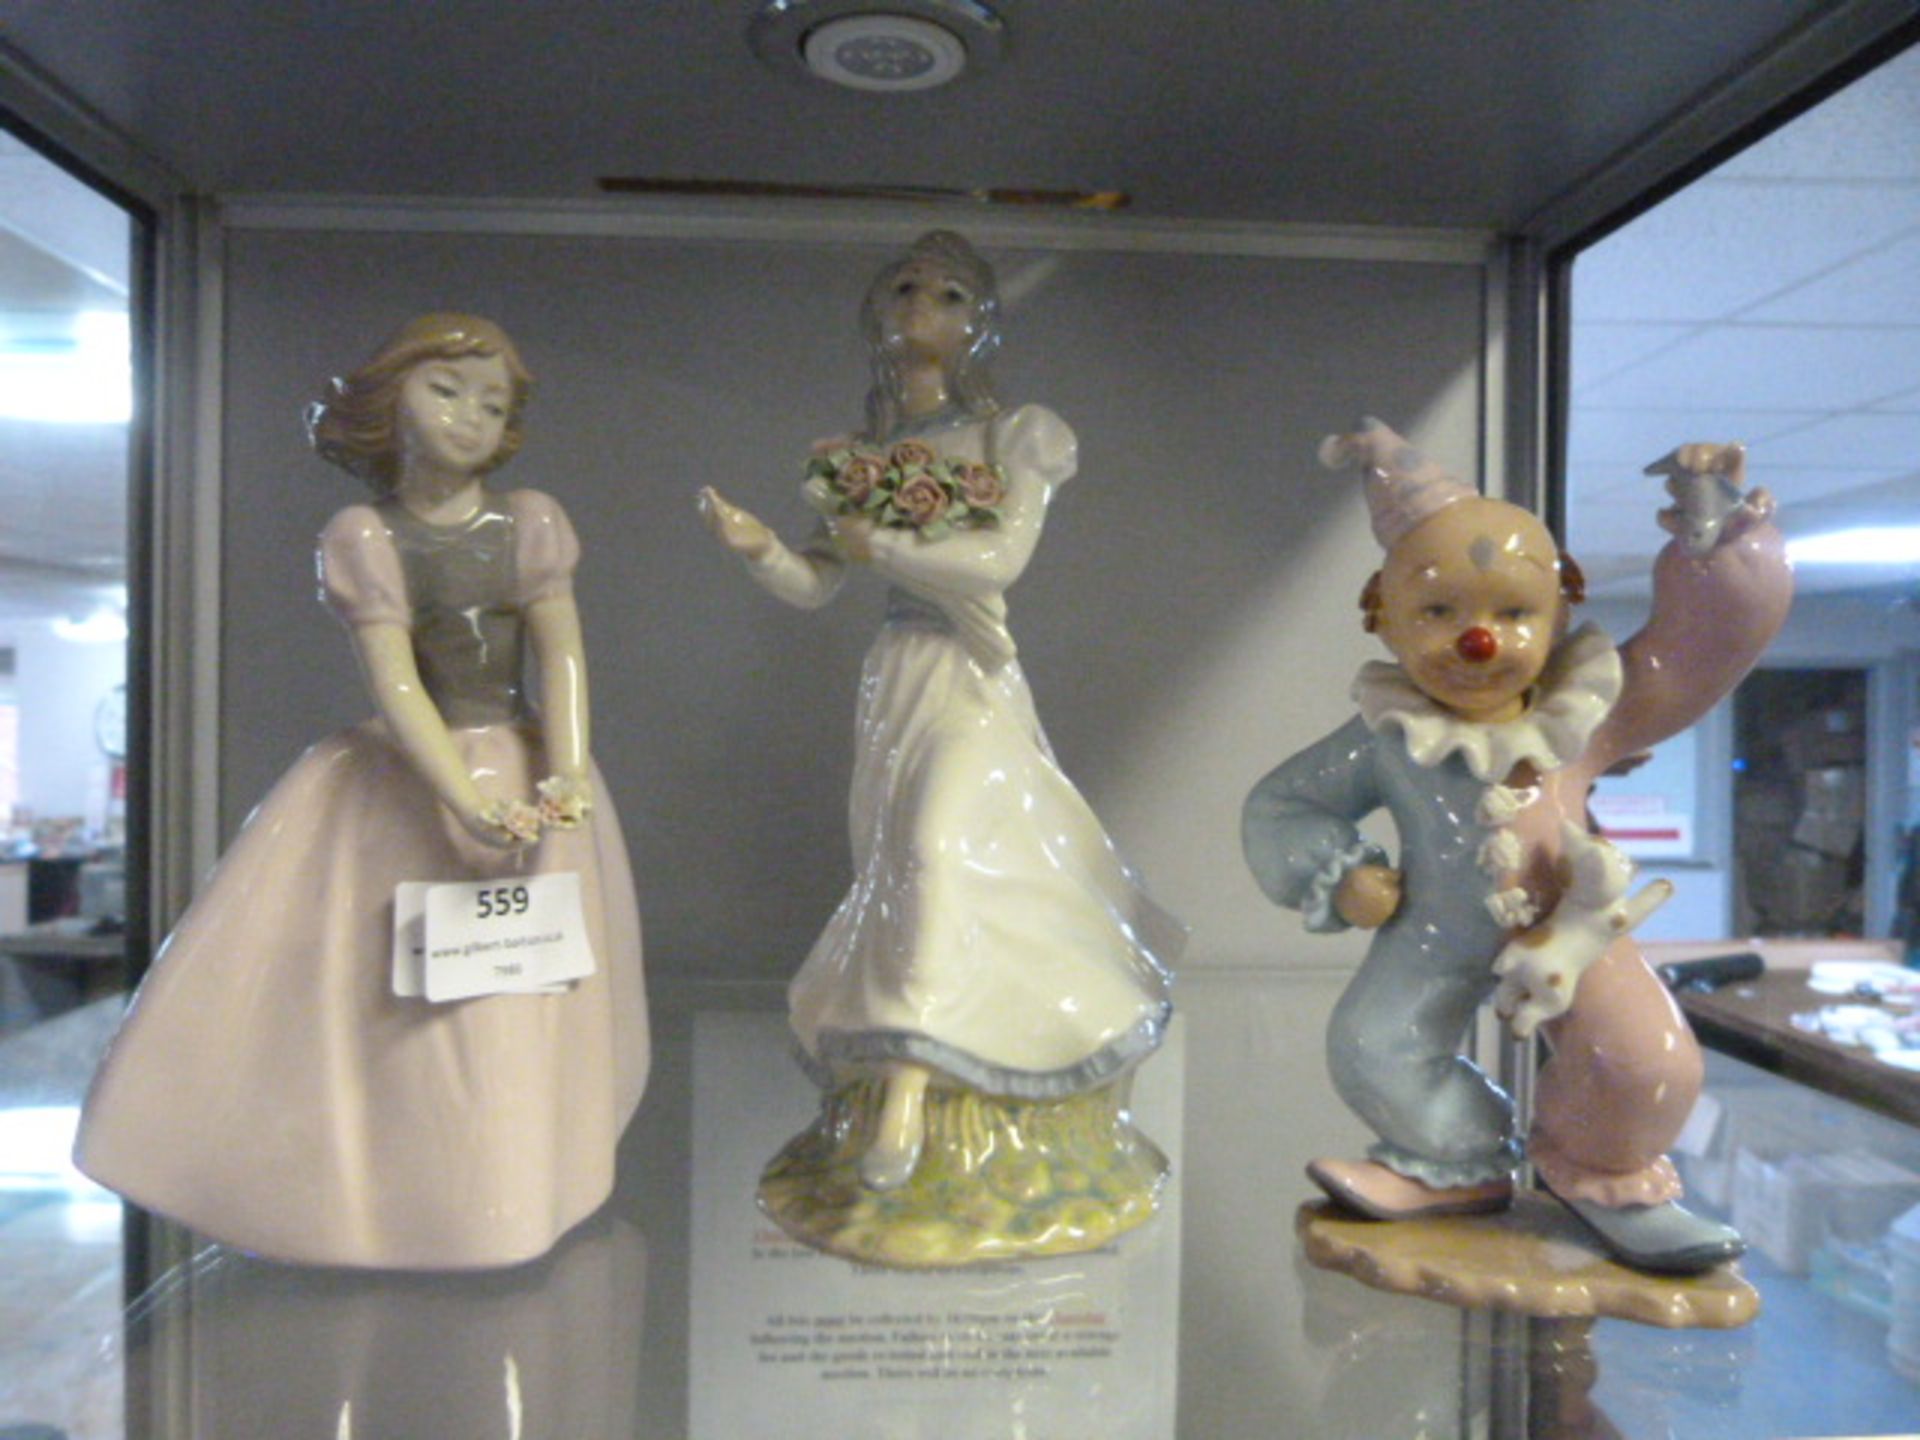 Three Spanish Pottery Figurines - Girls with Flowe